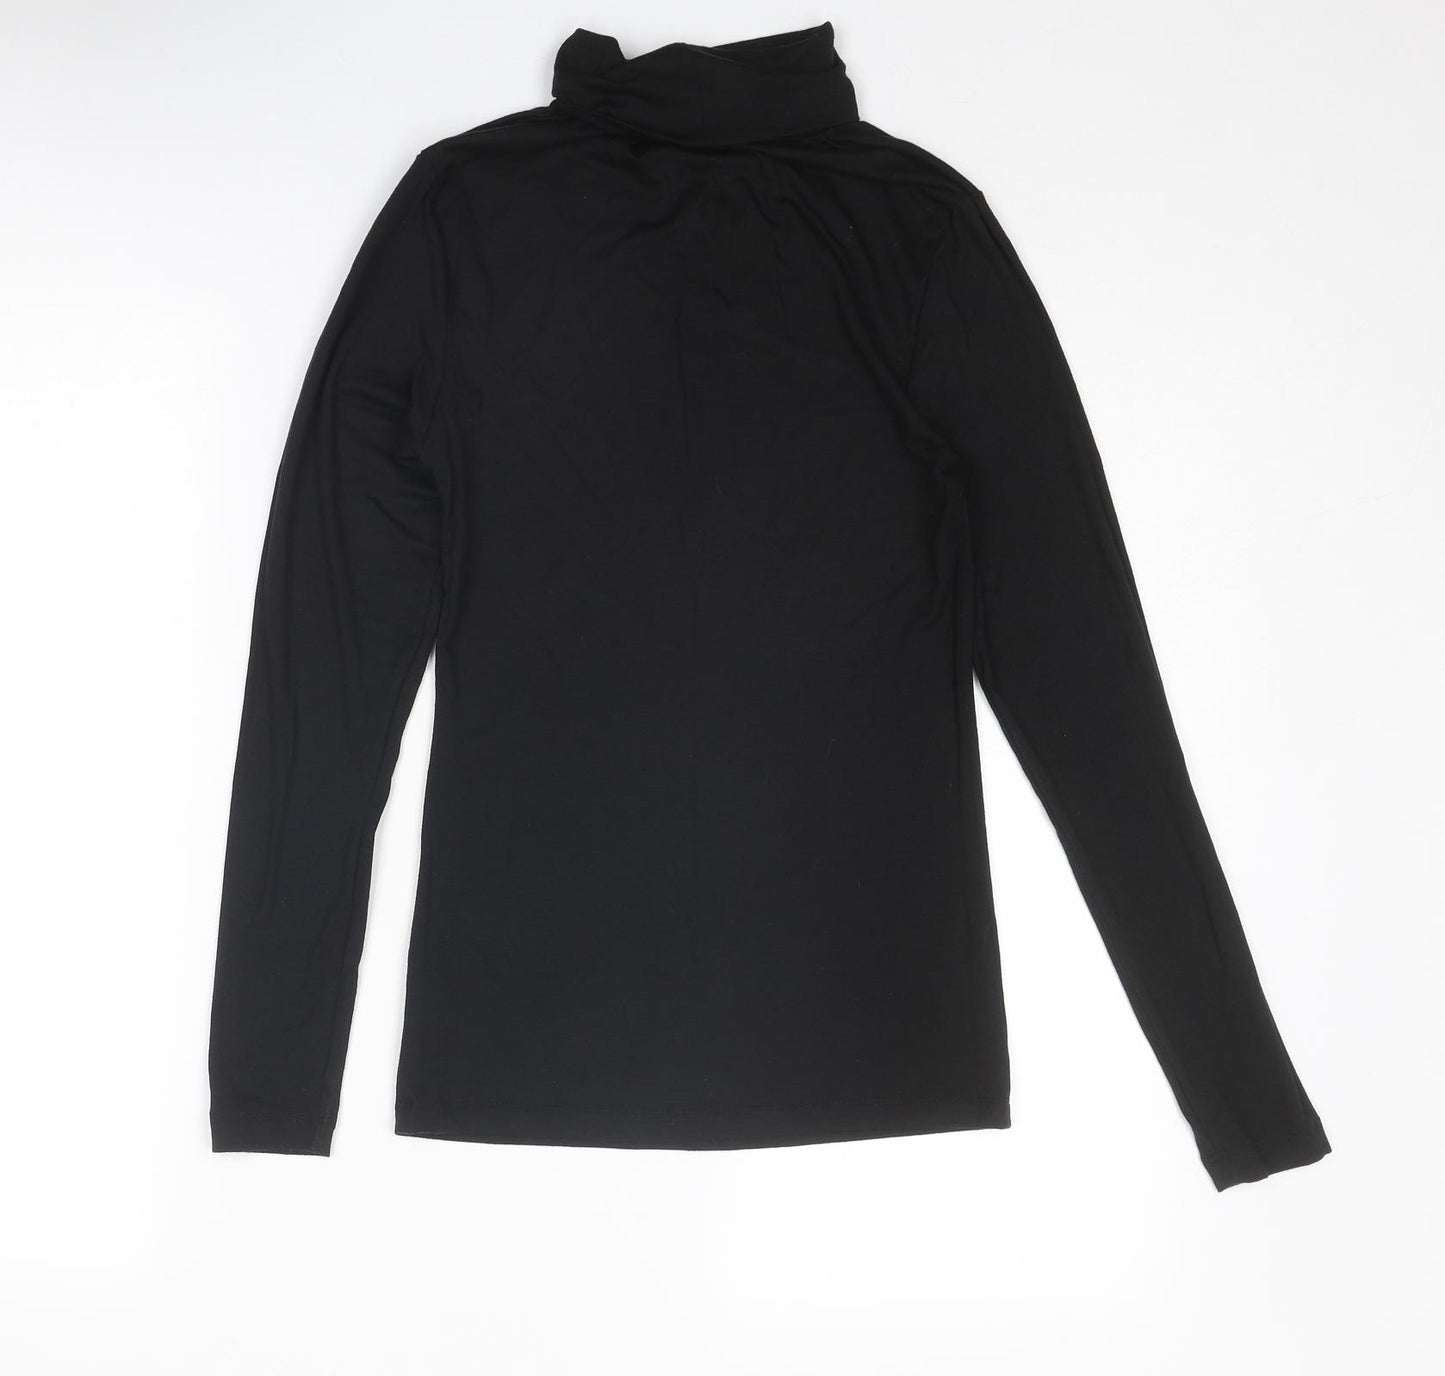 Marks and Spencer Womens Black Acrylic Basic T-Shirt Size 12 Roll Neck - Heatgen